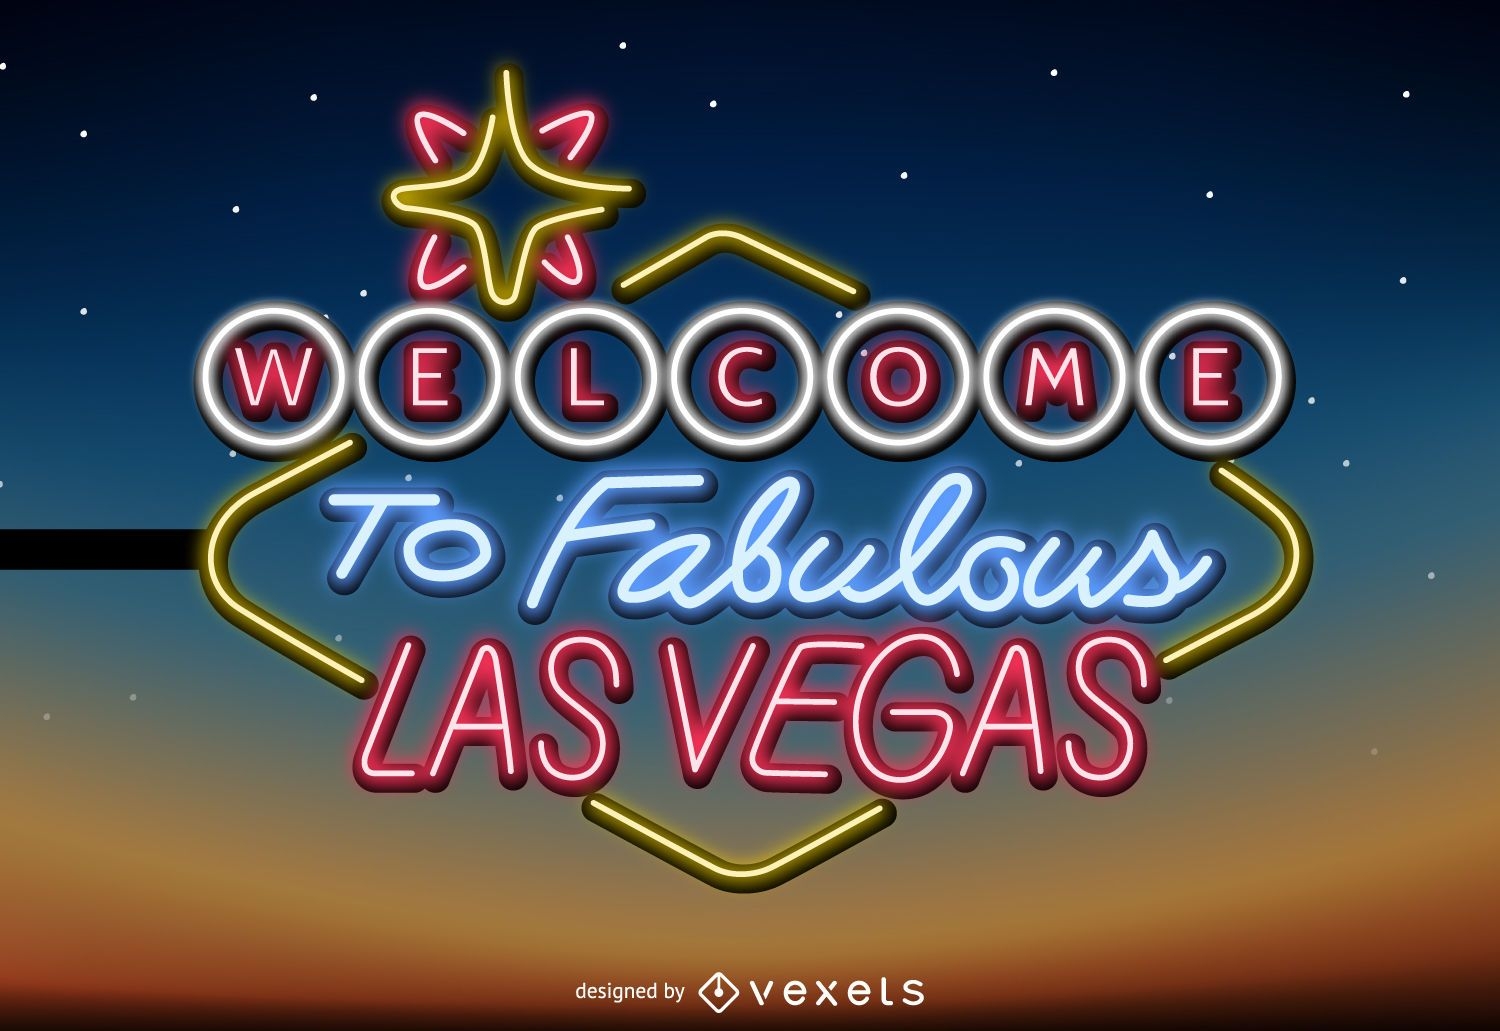 Las Vegas Neon Sign Vector Download